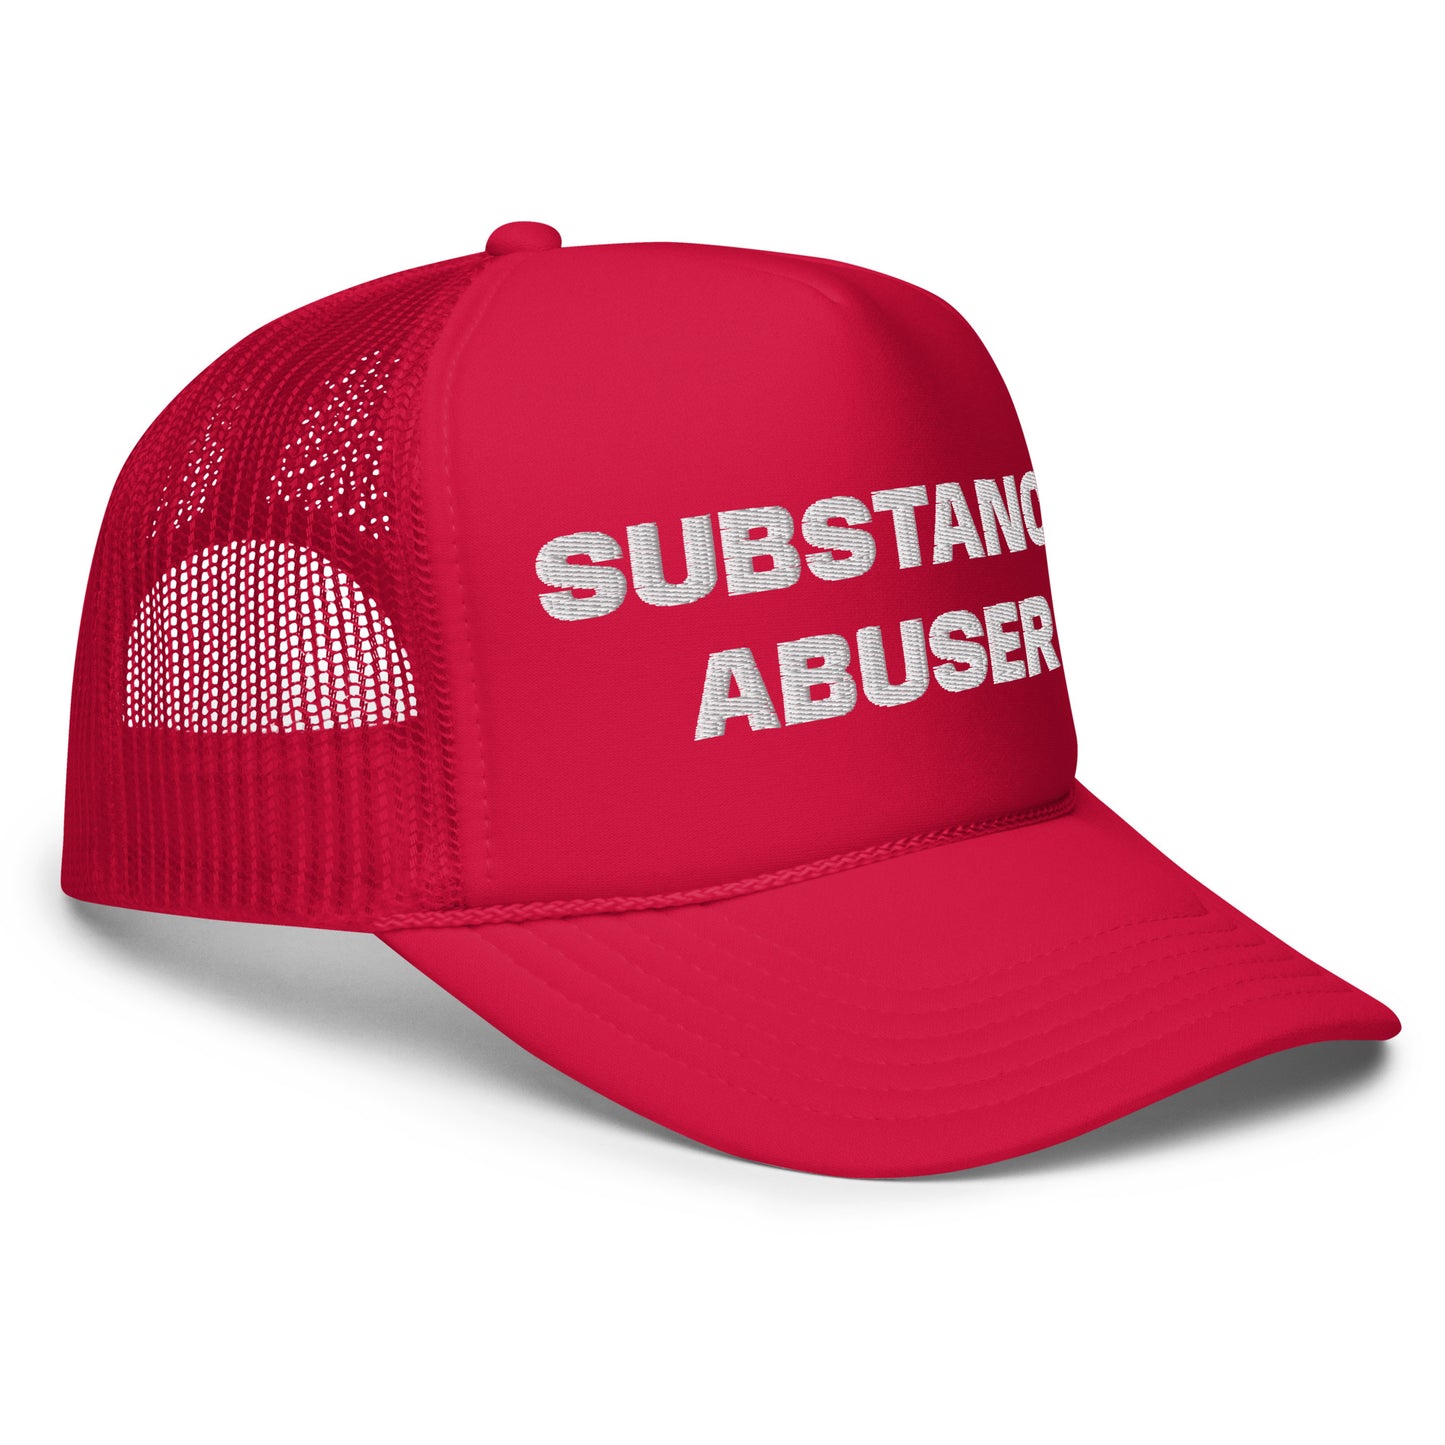 Substance Abuser Foam Trucker Hat